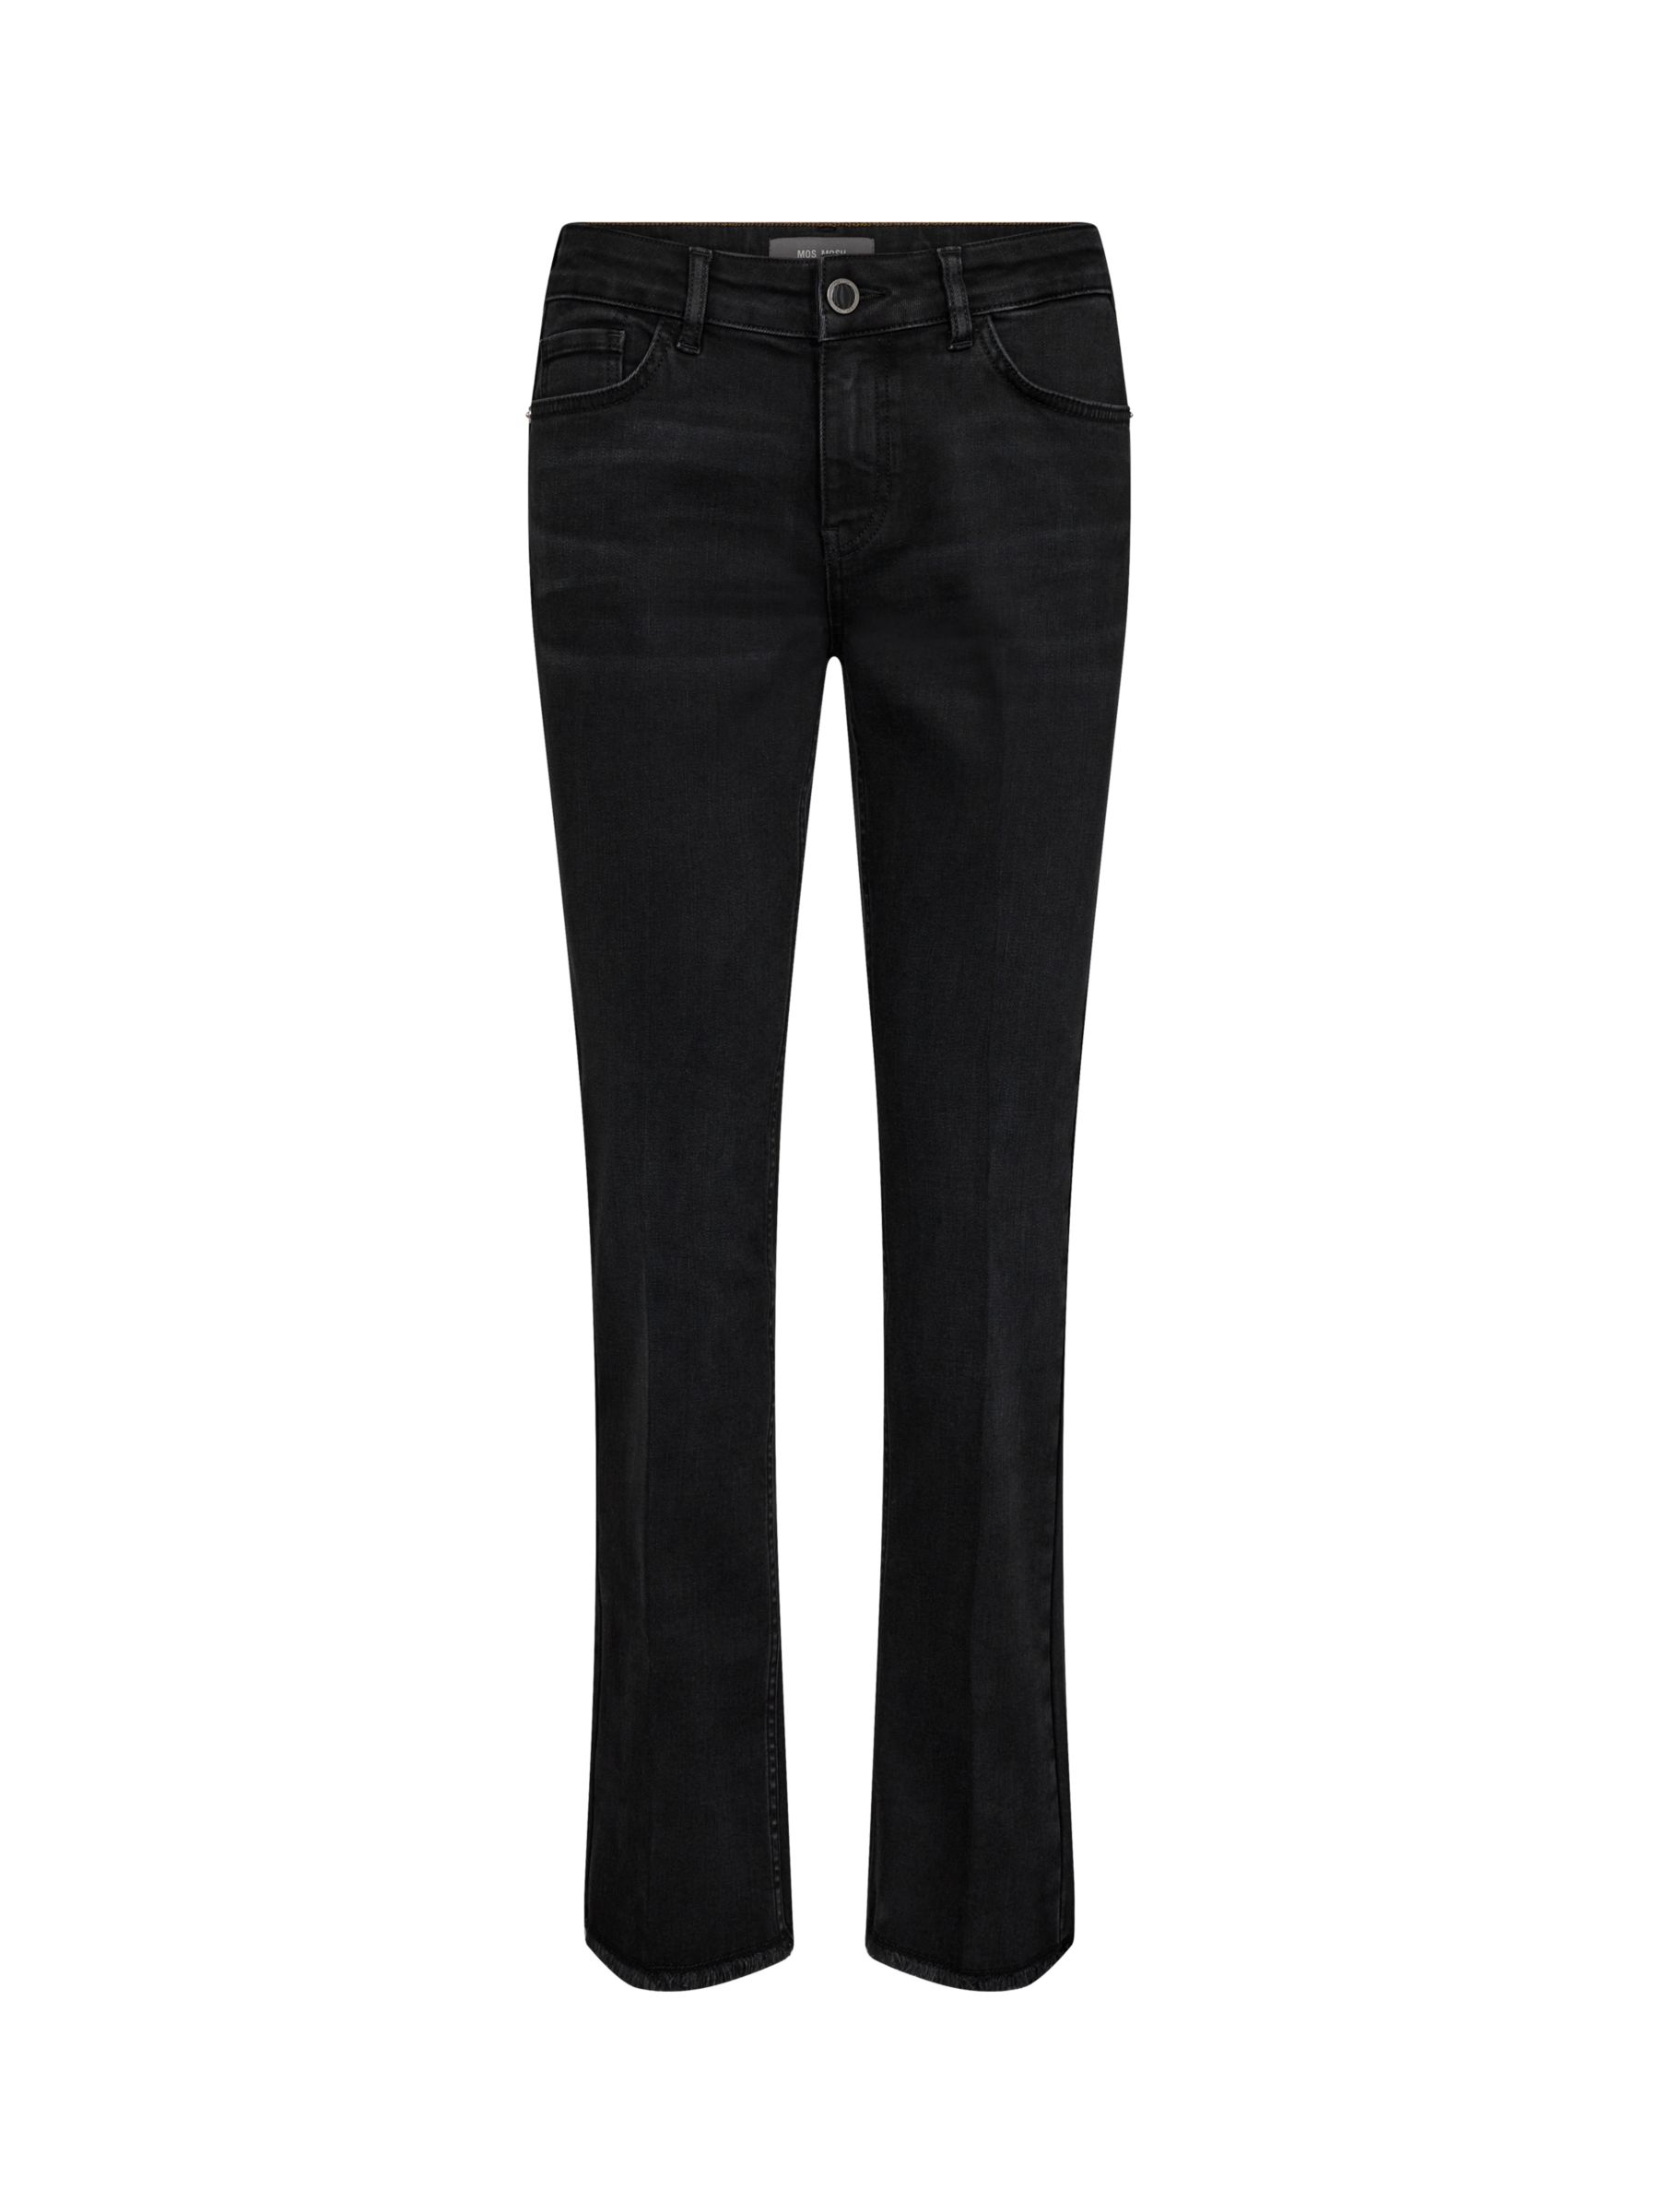 MOS MOSH Ashley Imera Flared Jeans, Black at John Lewis & Partners